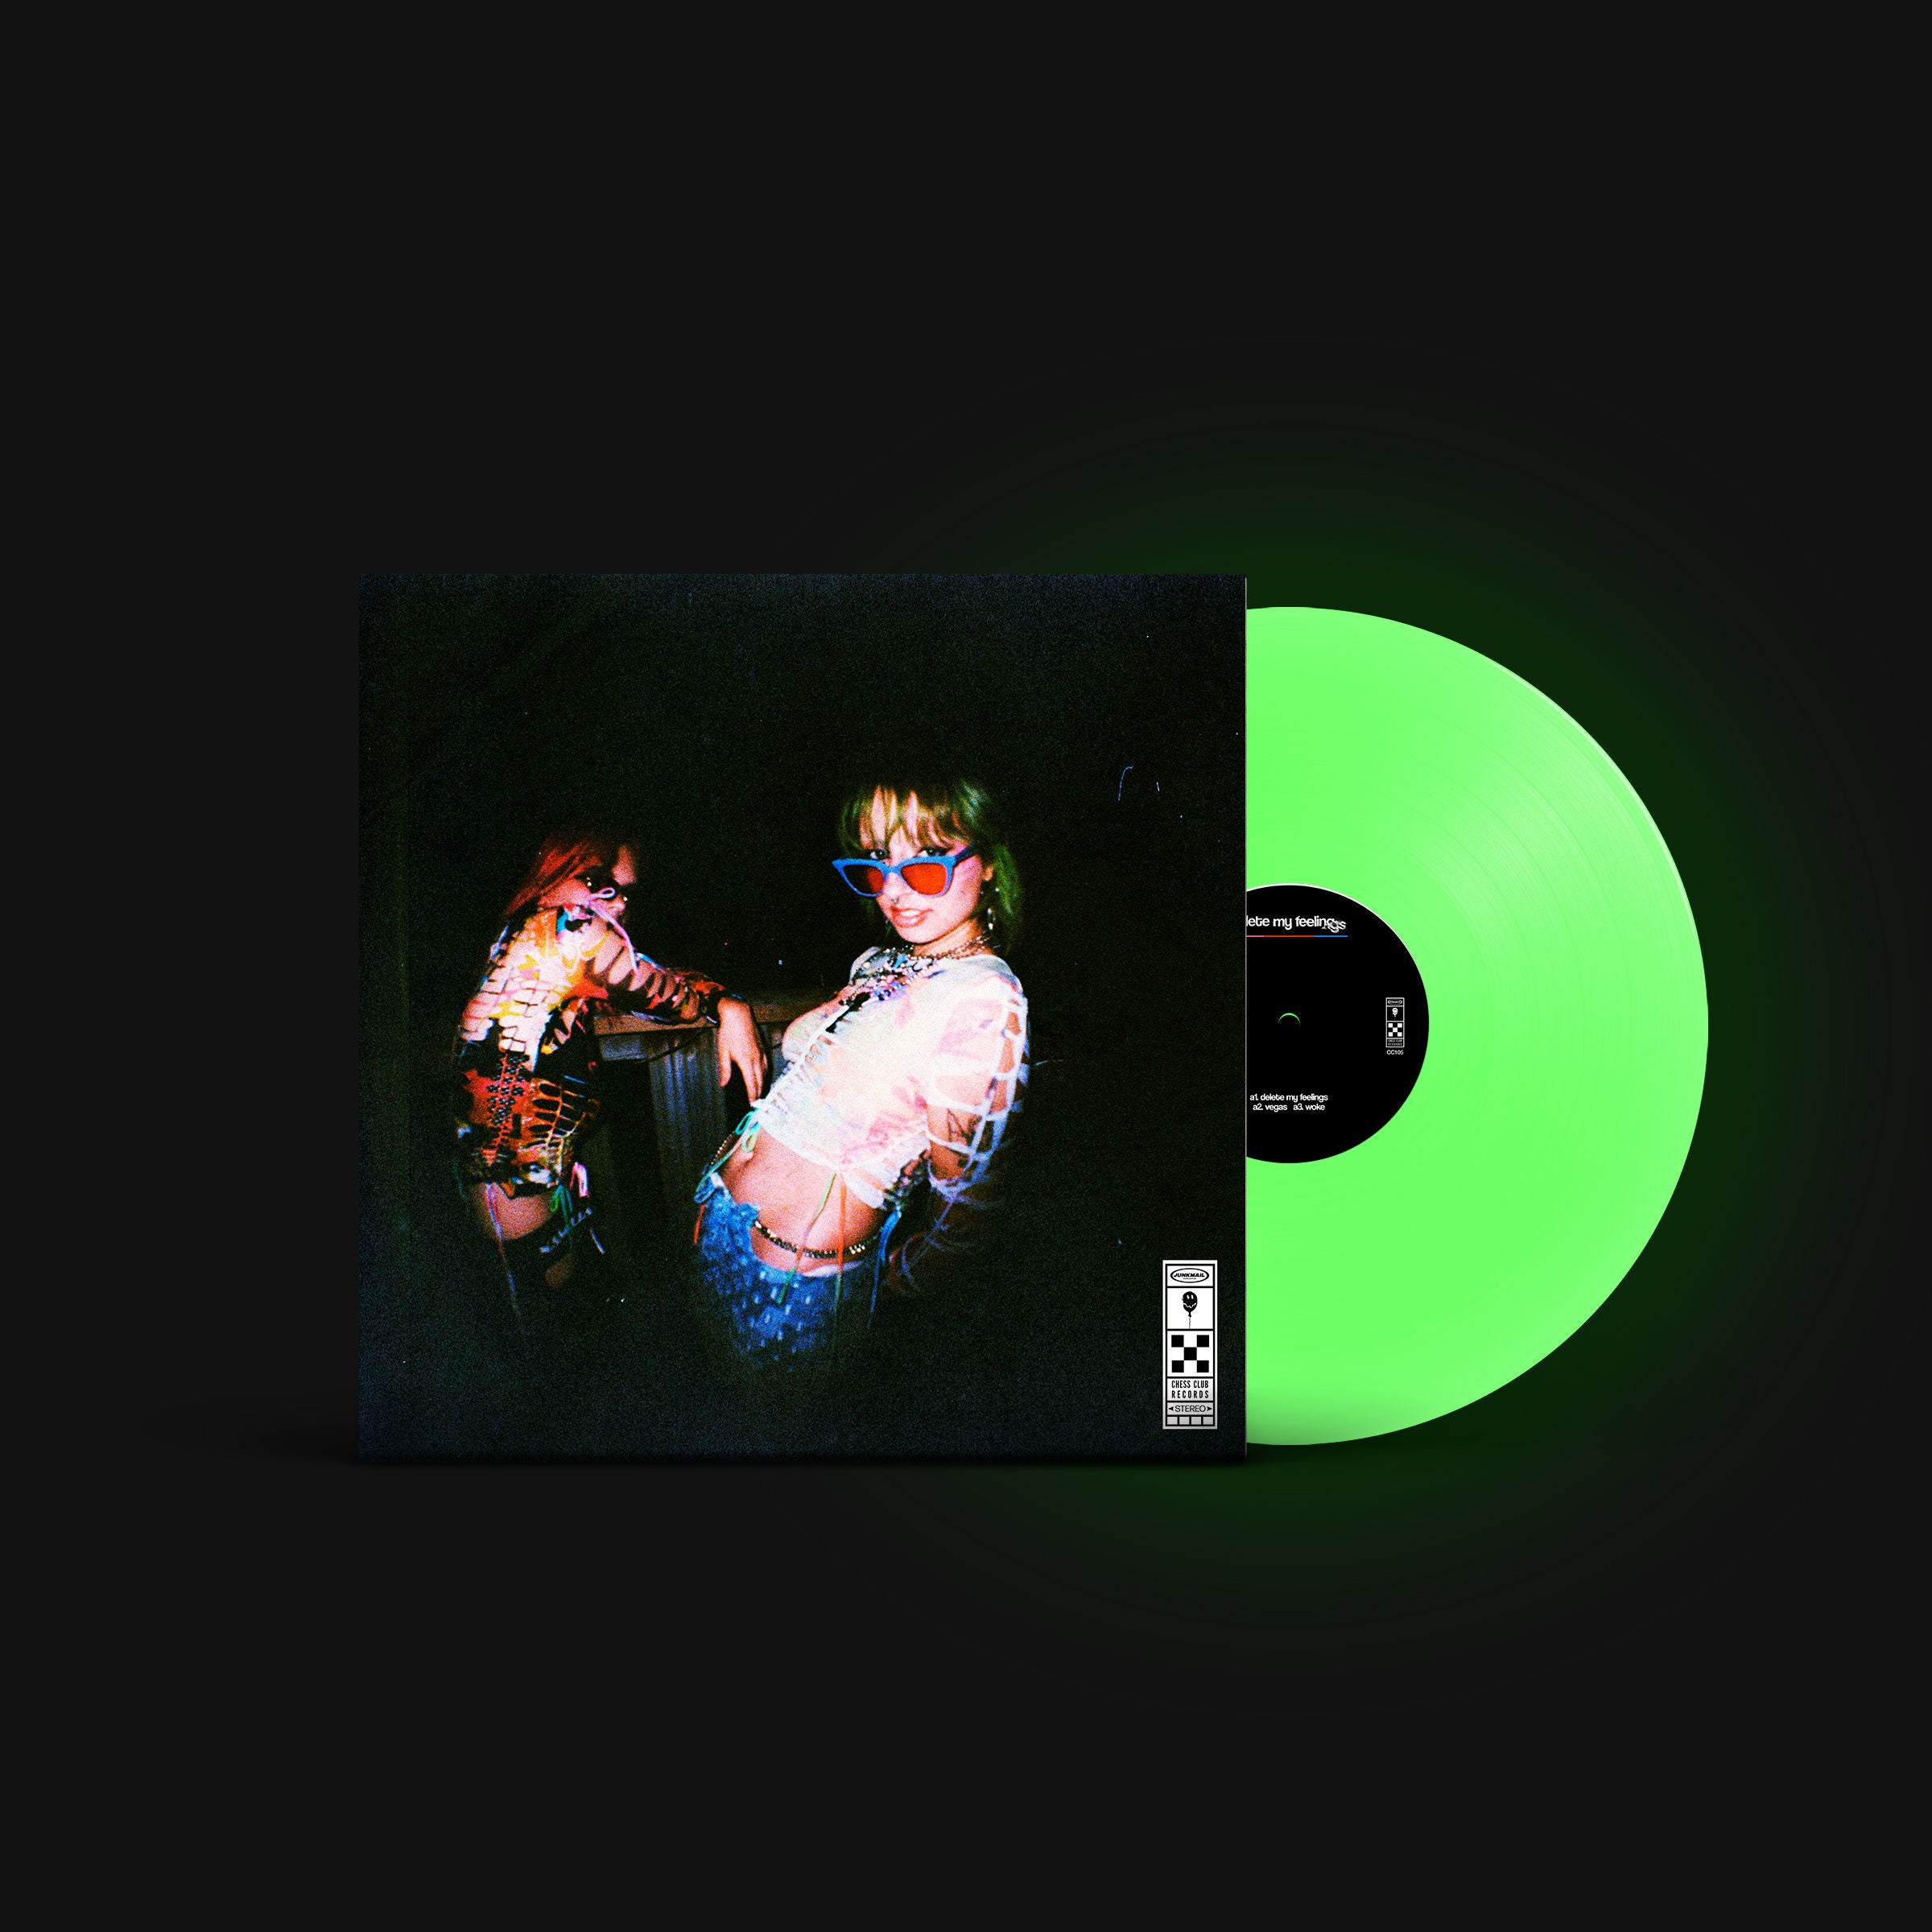 Delete My Feelings: Limited Edition Glow In The Dark Vinyl LP